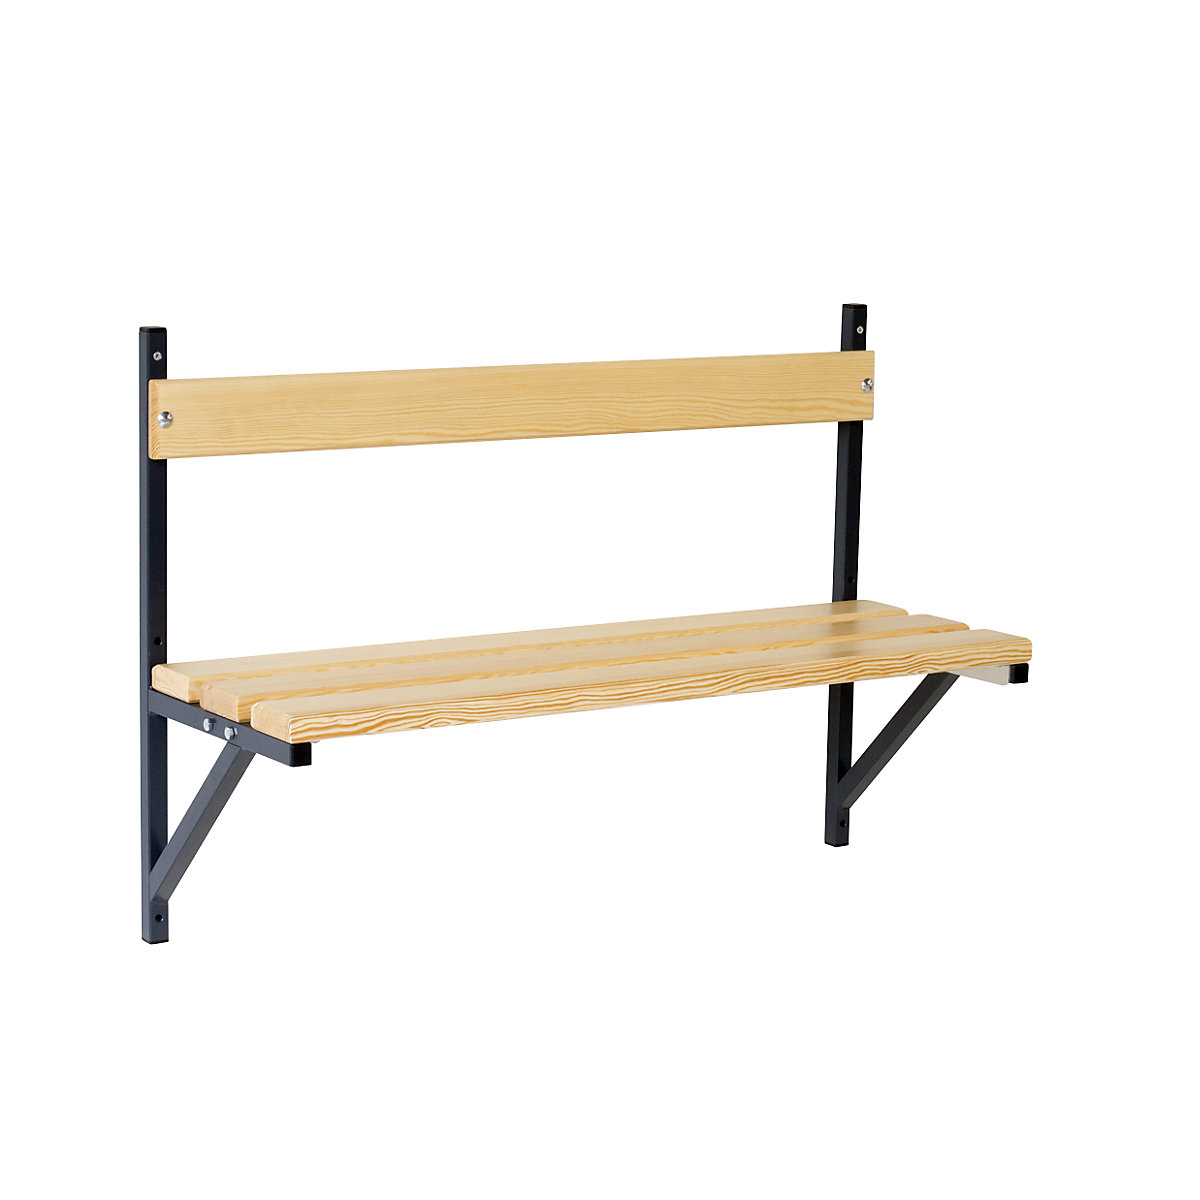 Wall mounted bench - Sypro